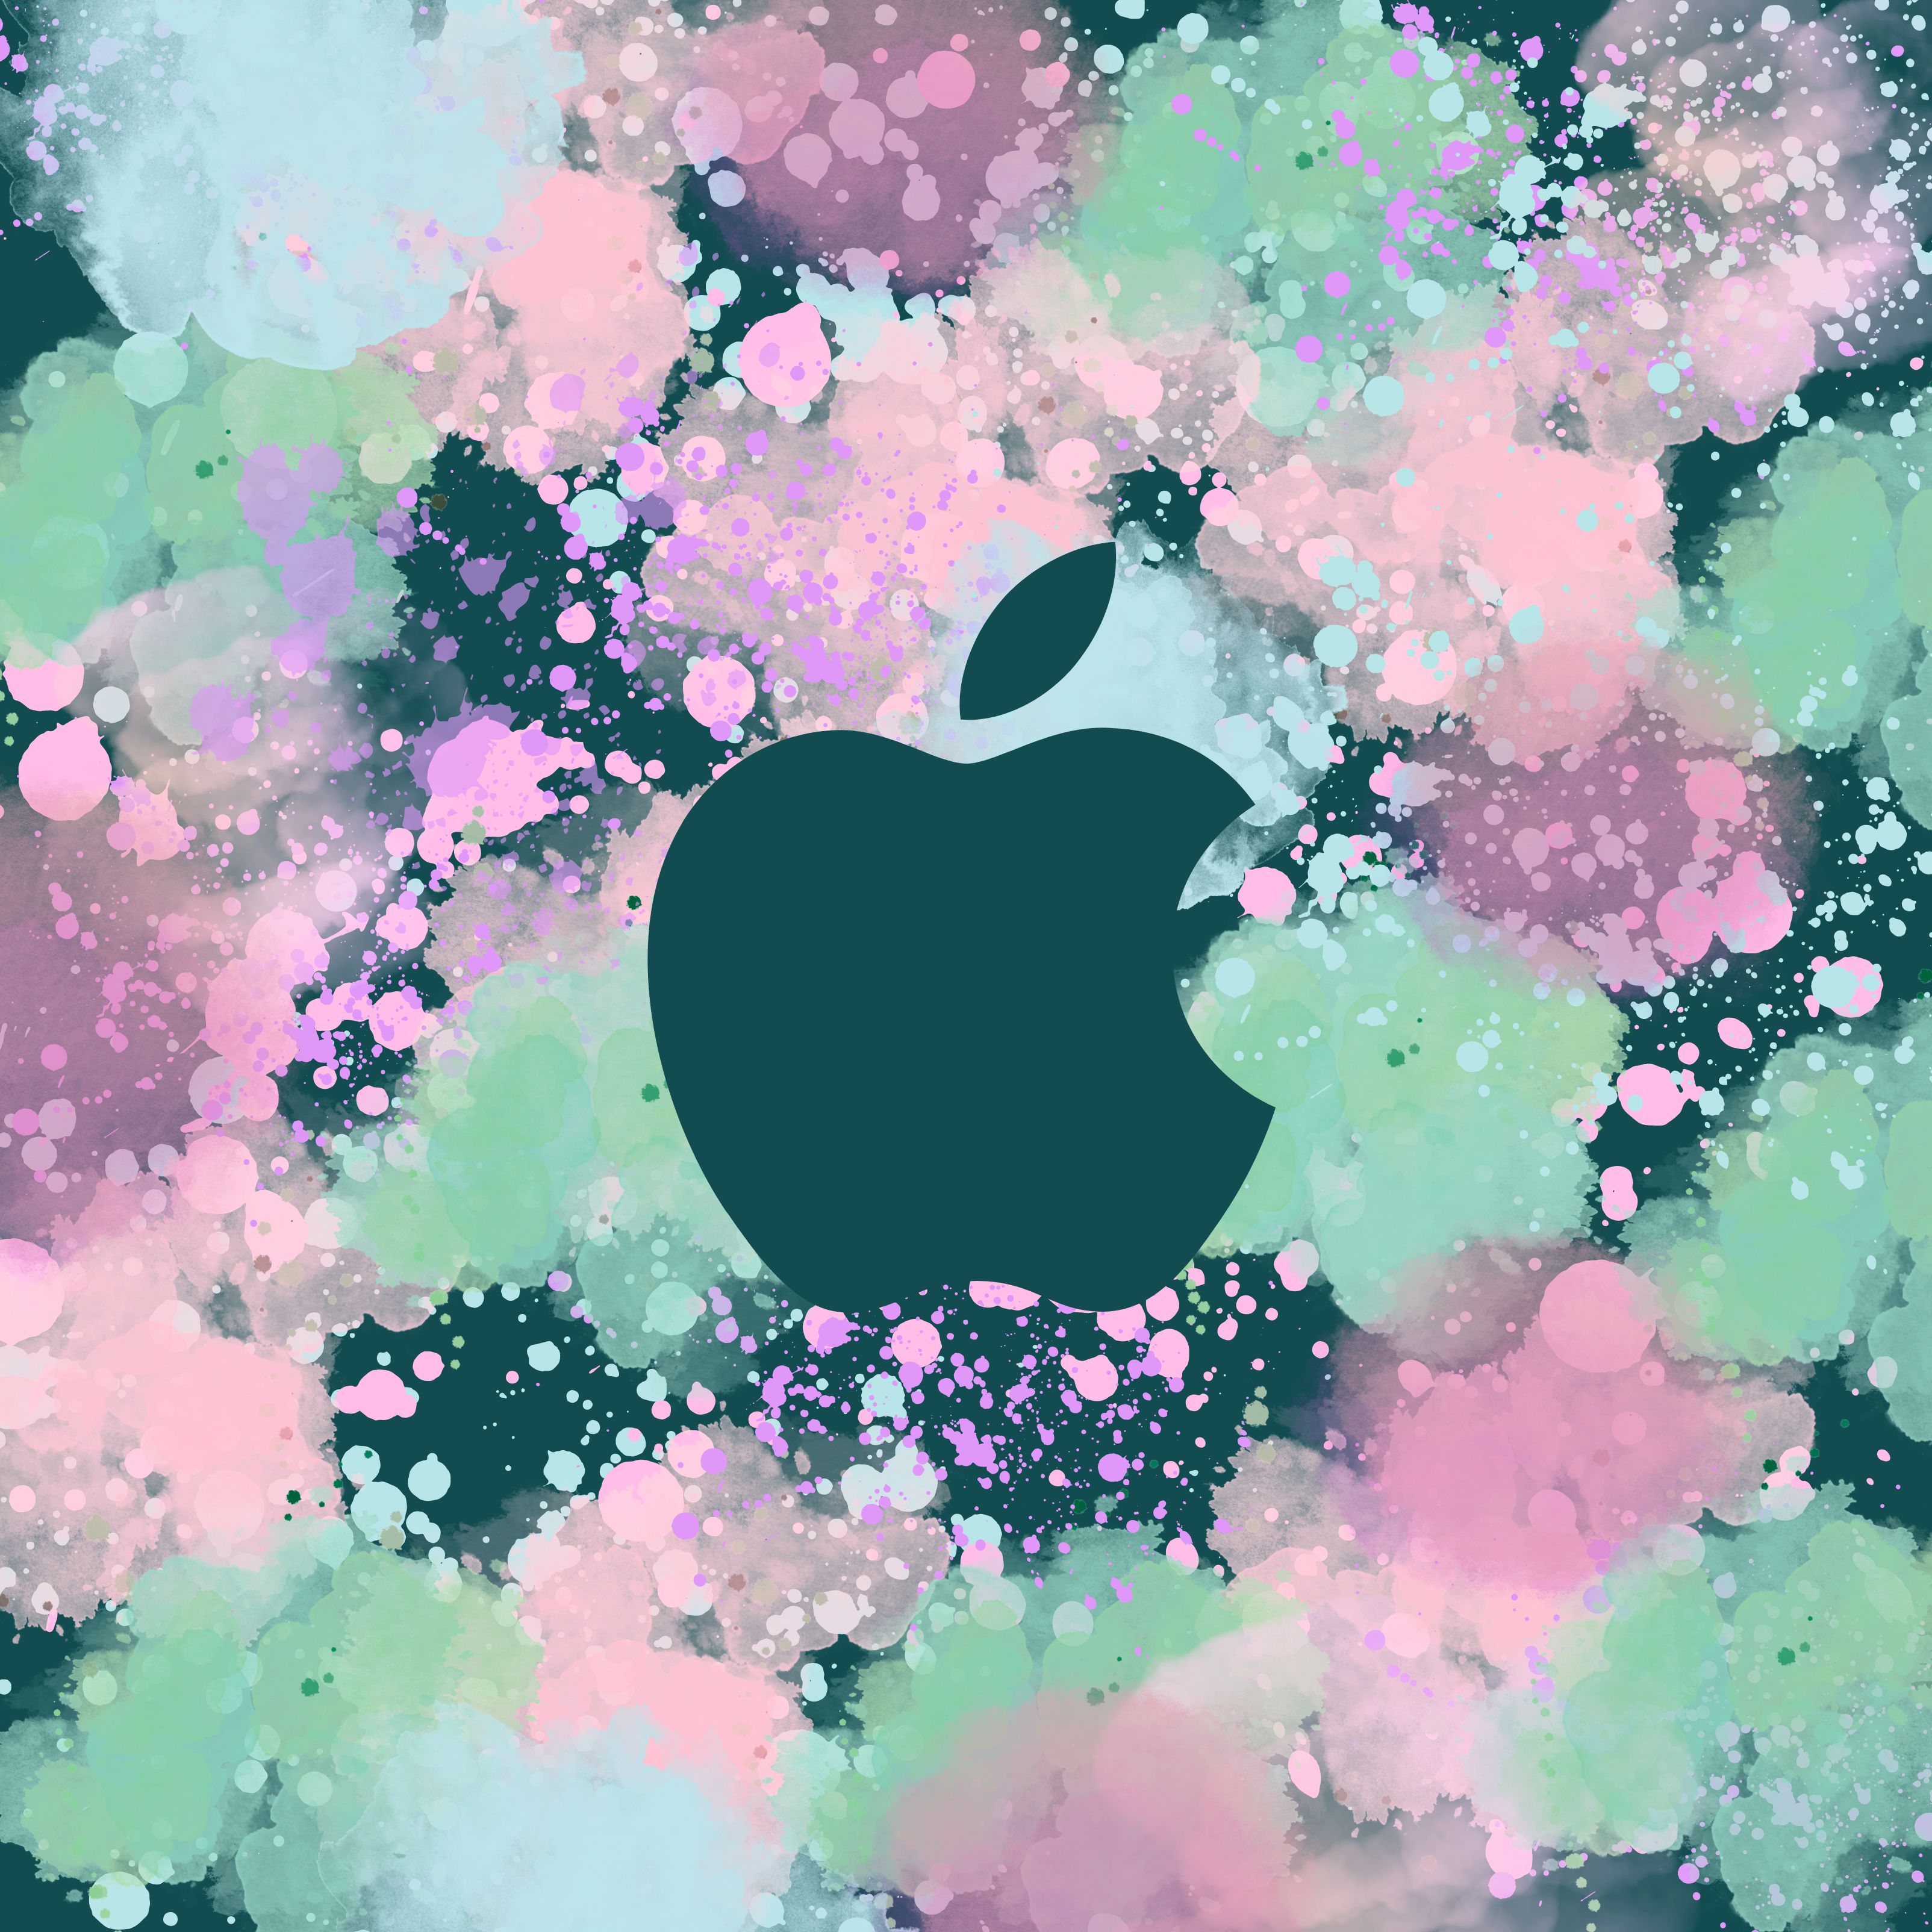 iPad Wallpapers Pastel Watercolour Apple Ipad Wallpaper 3208x3208 px